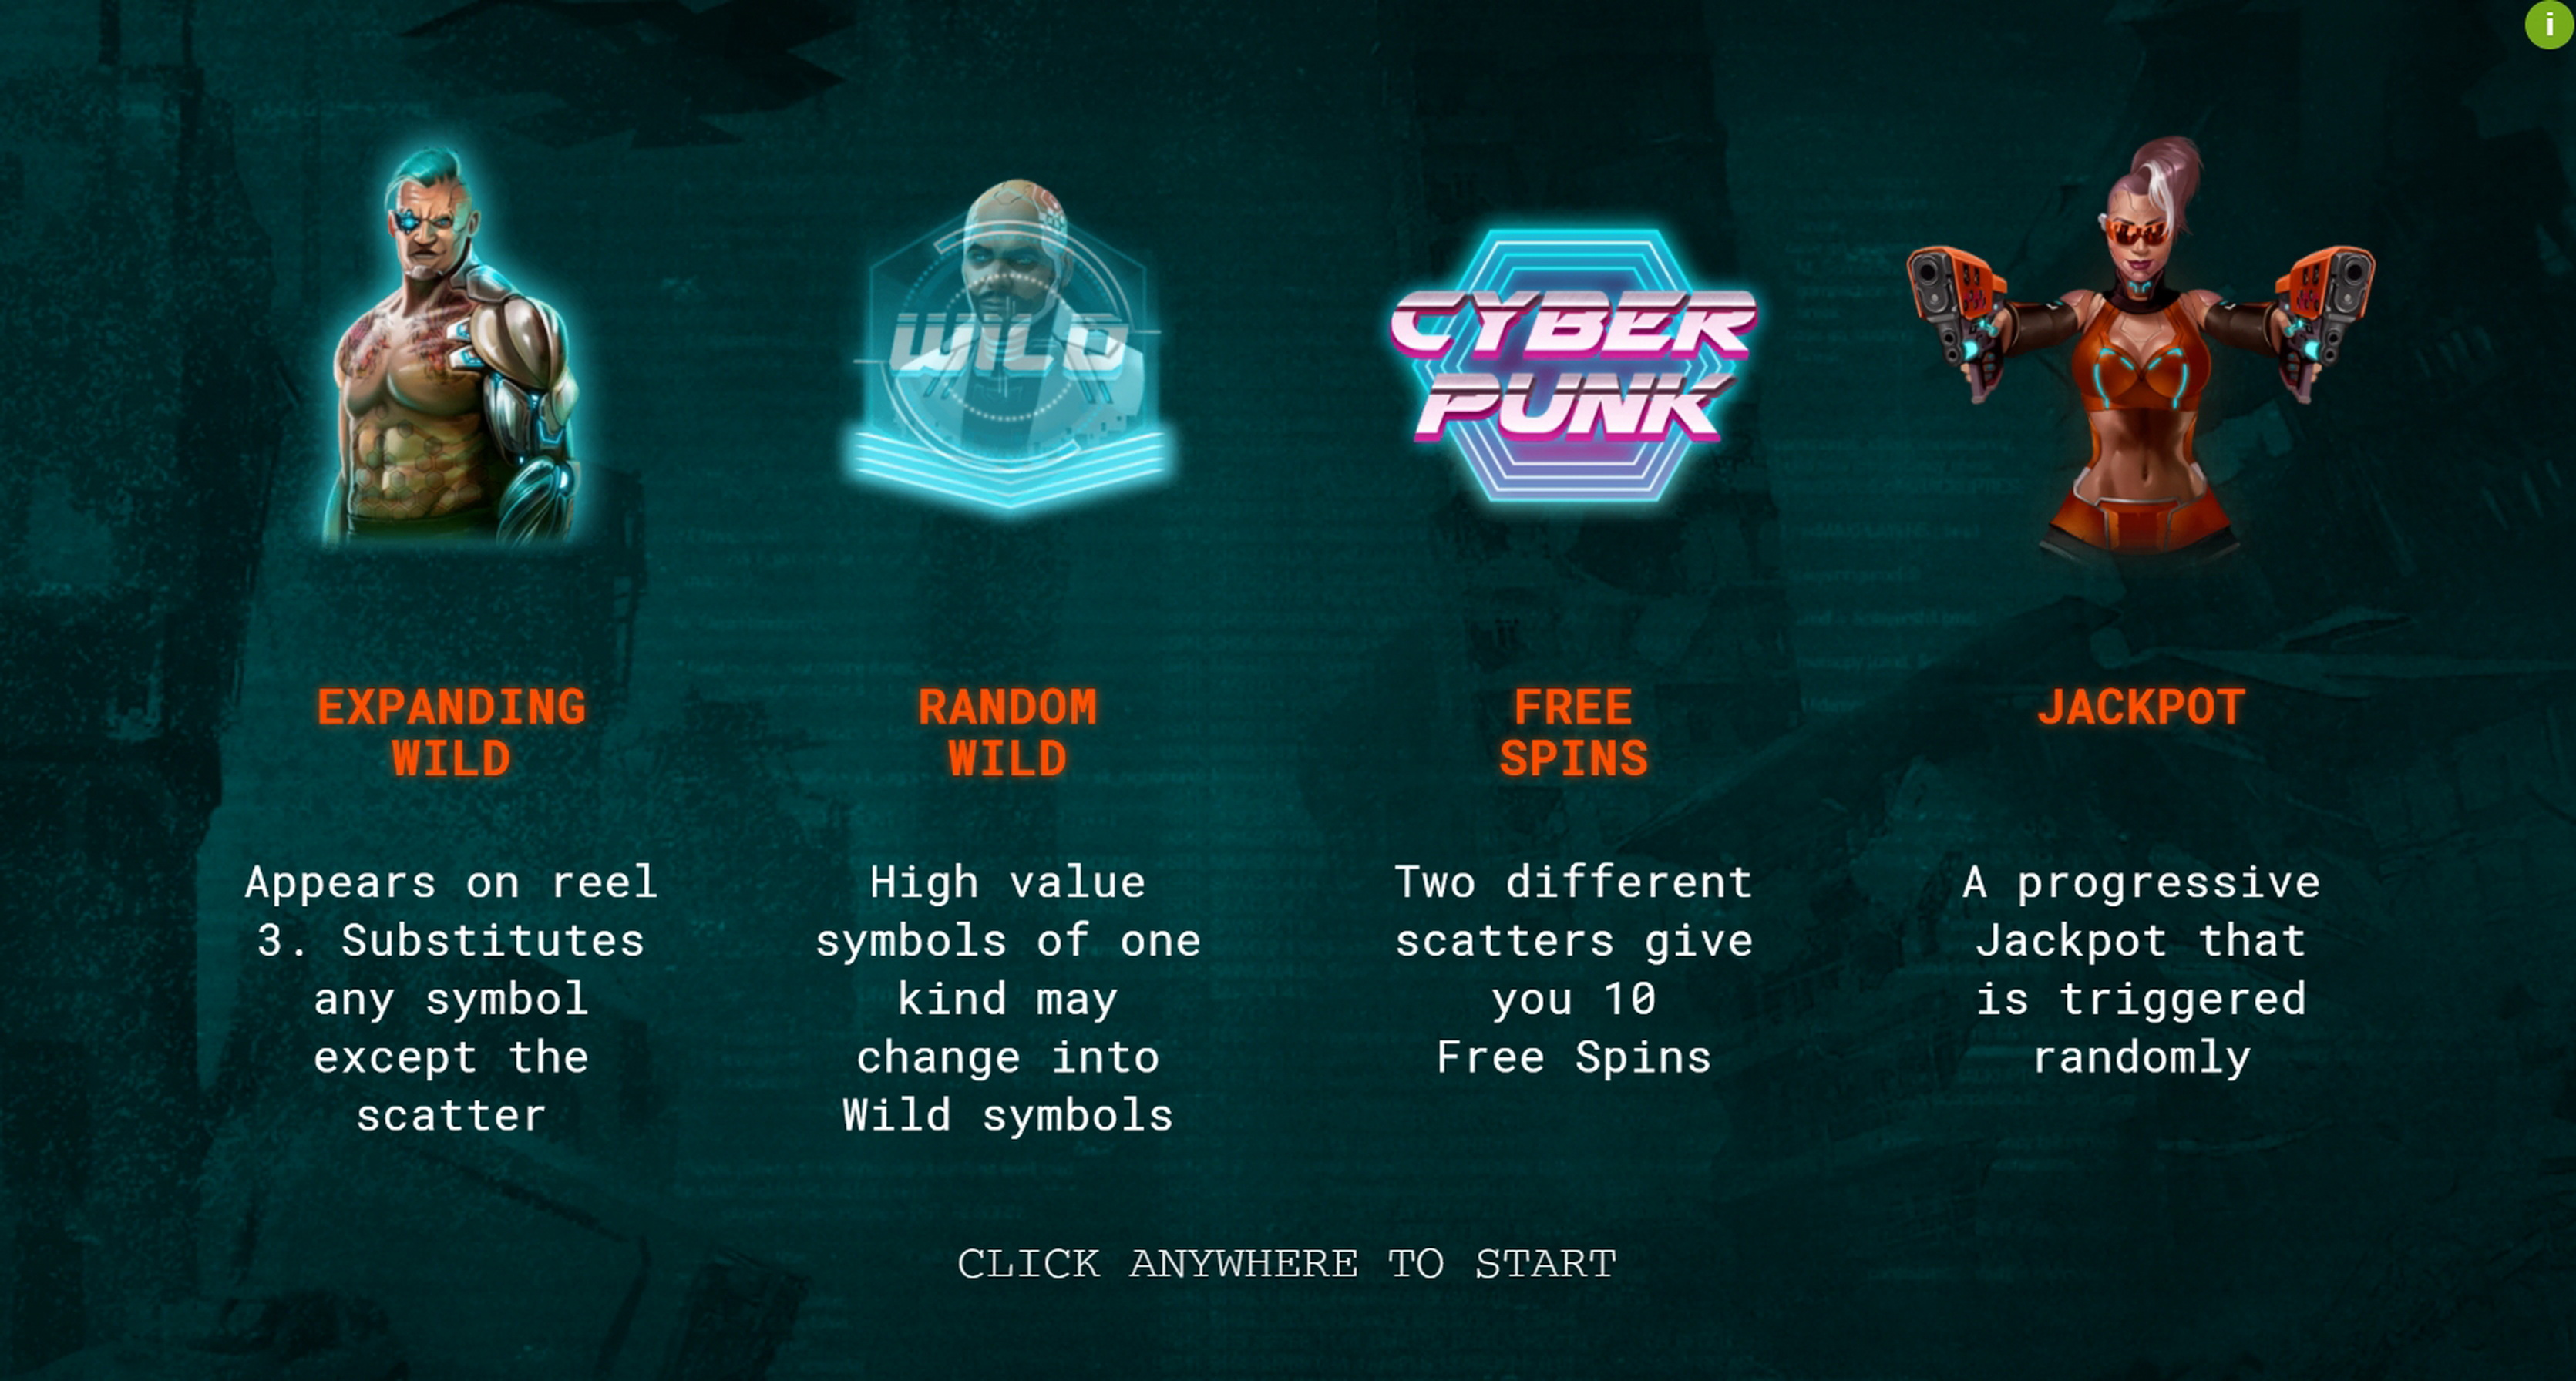 Play Cyberpunk Wars Free Casino Slot Game by Woohoo